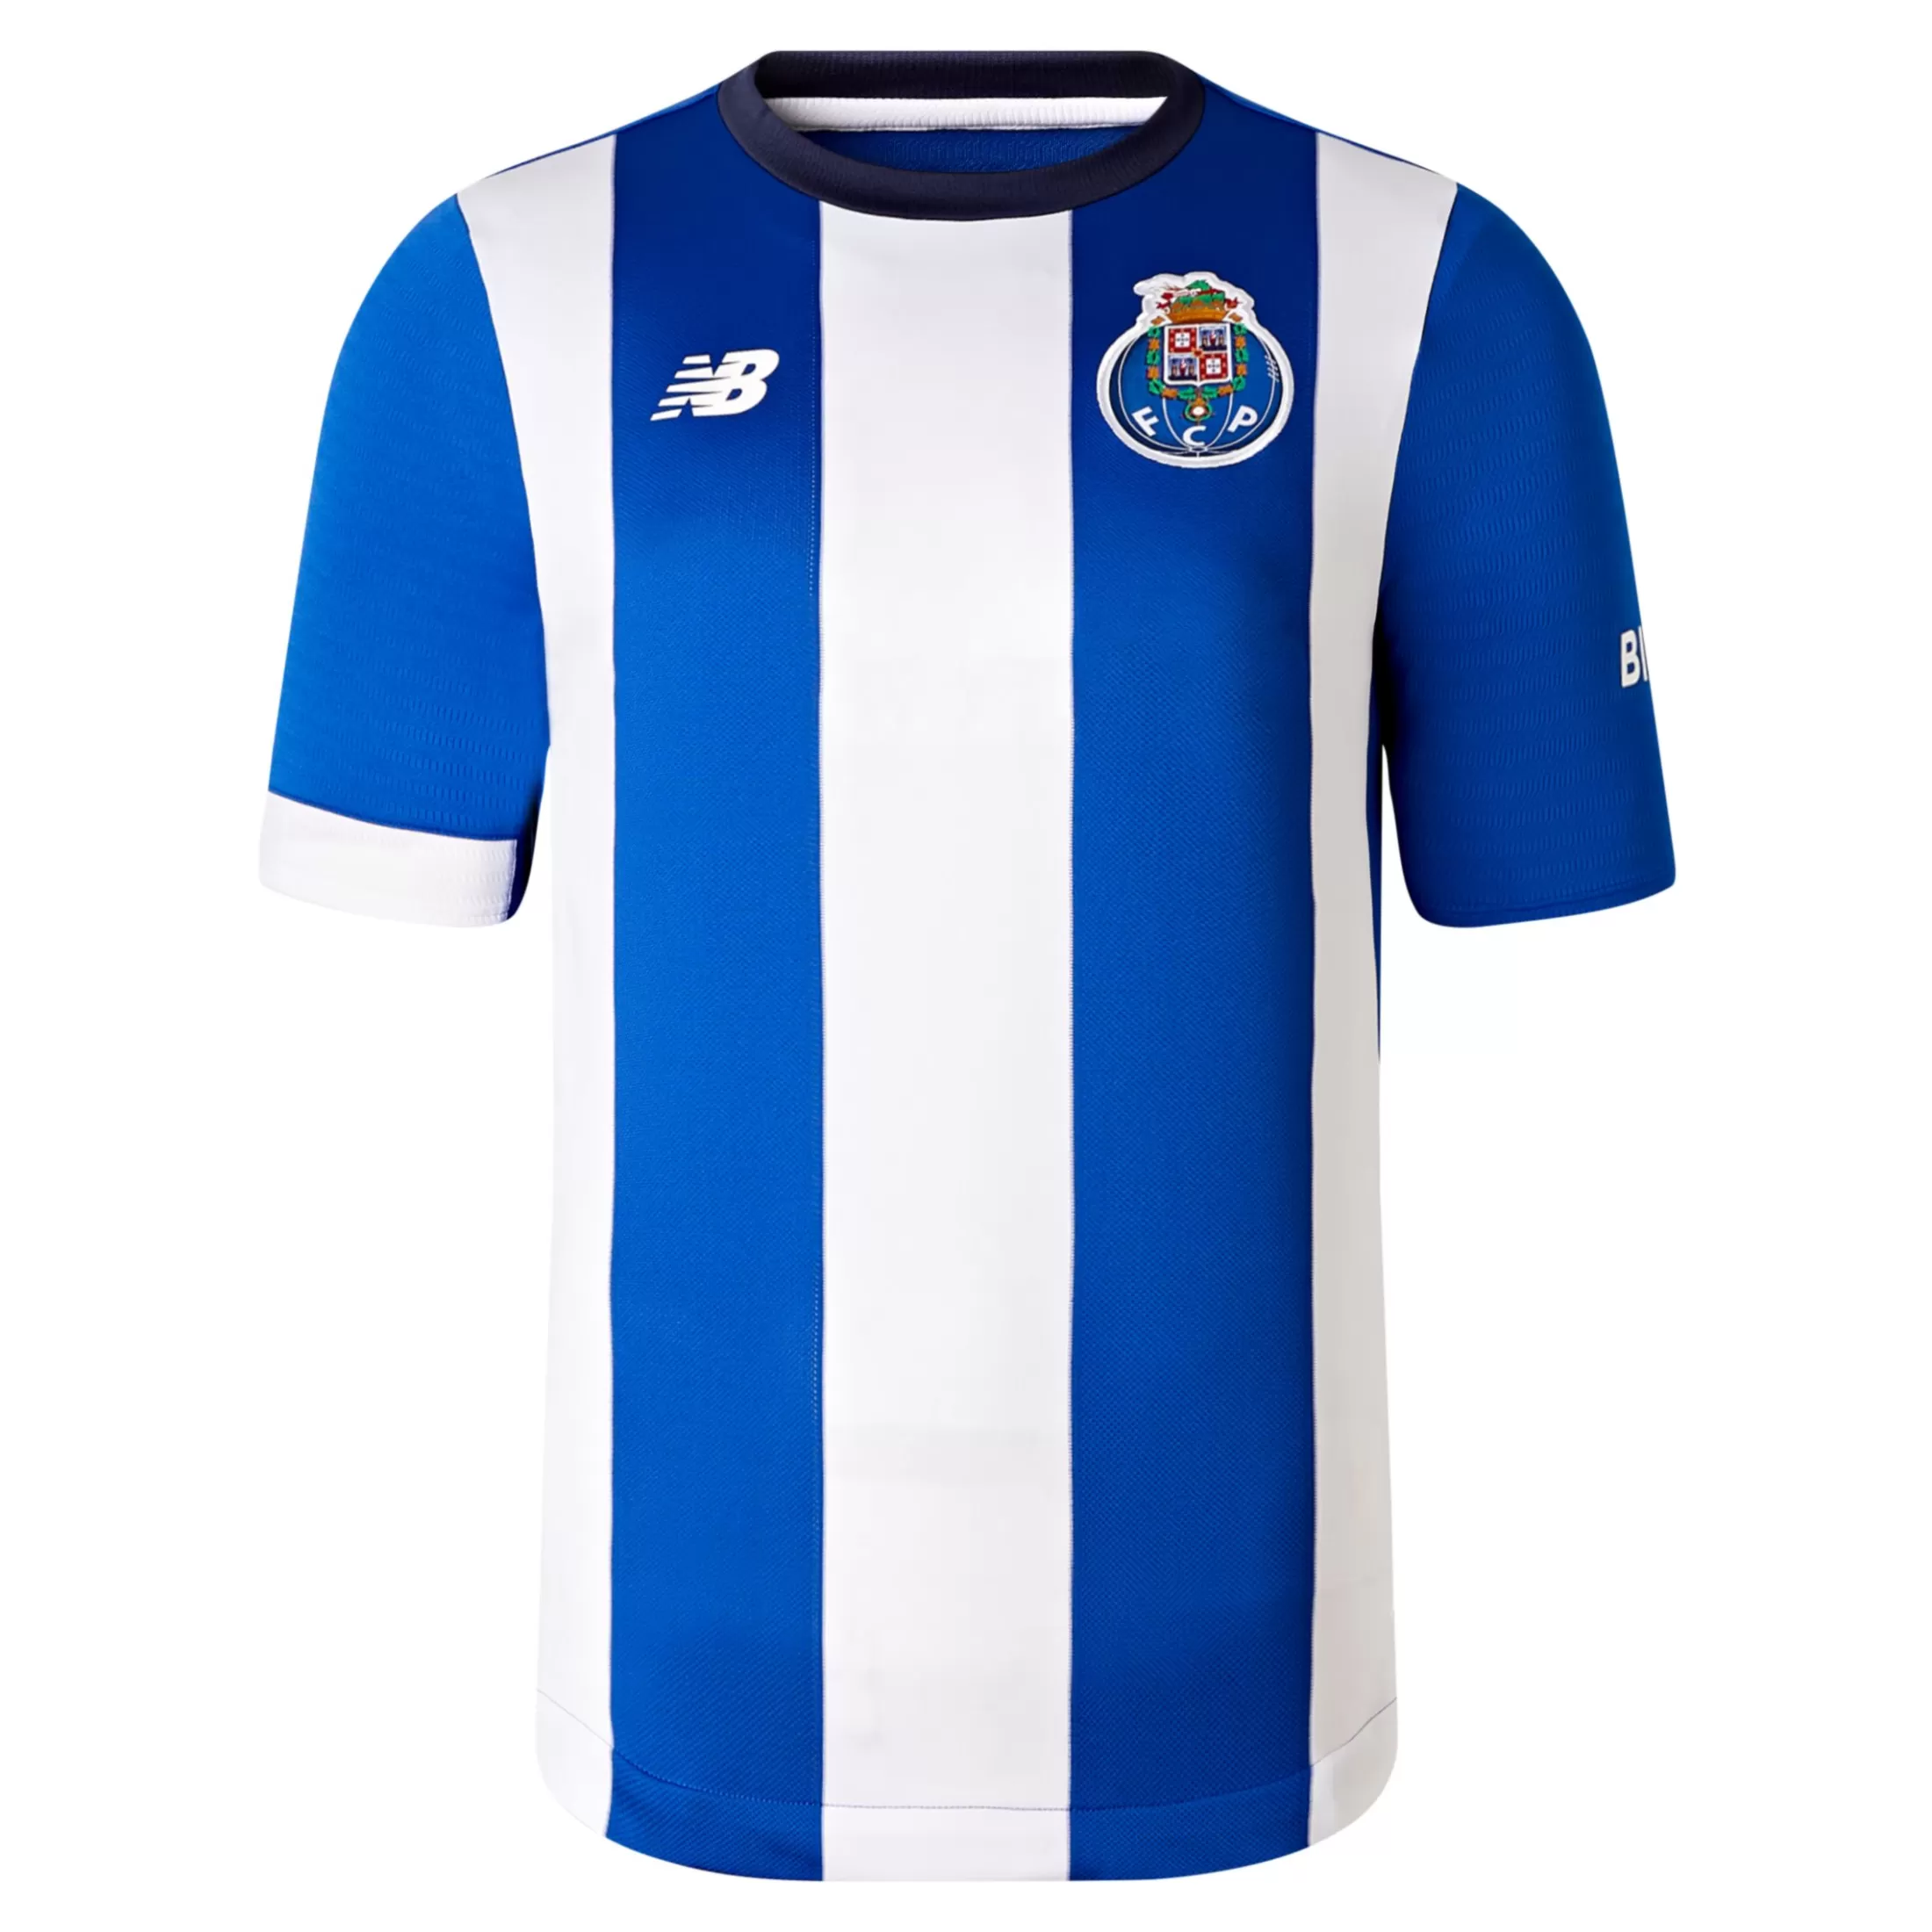 New Criança FC Porto Youth Short Sleeve Jersey Todo o vestuário